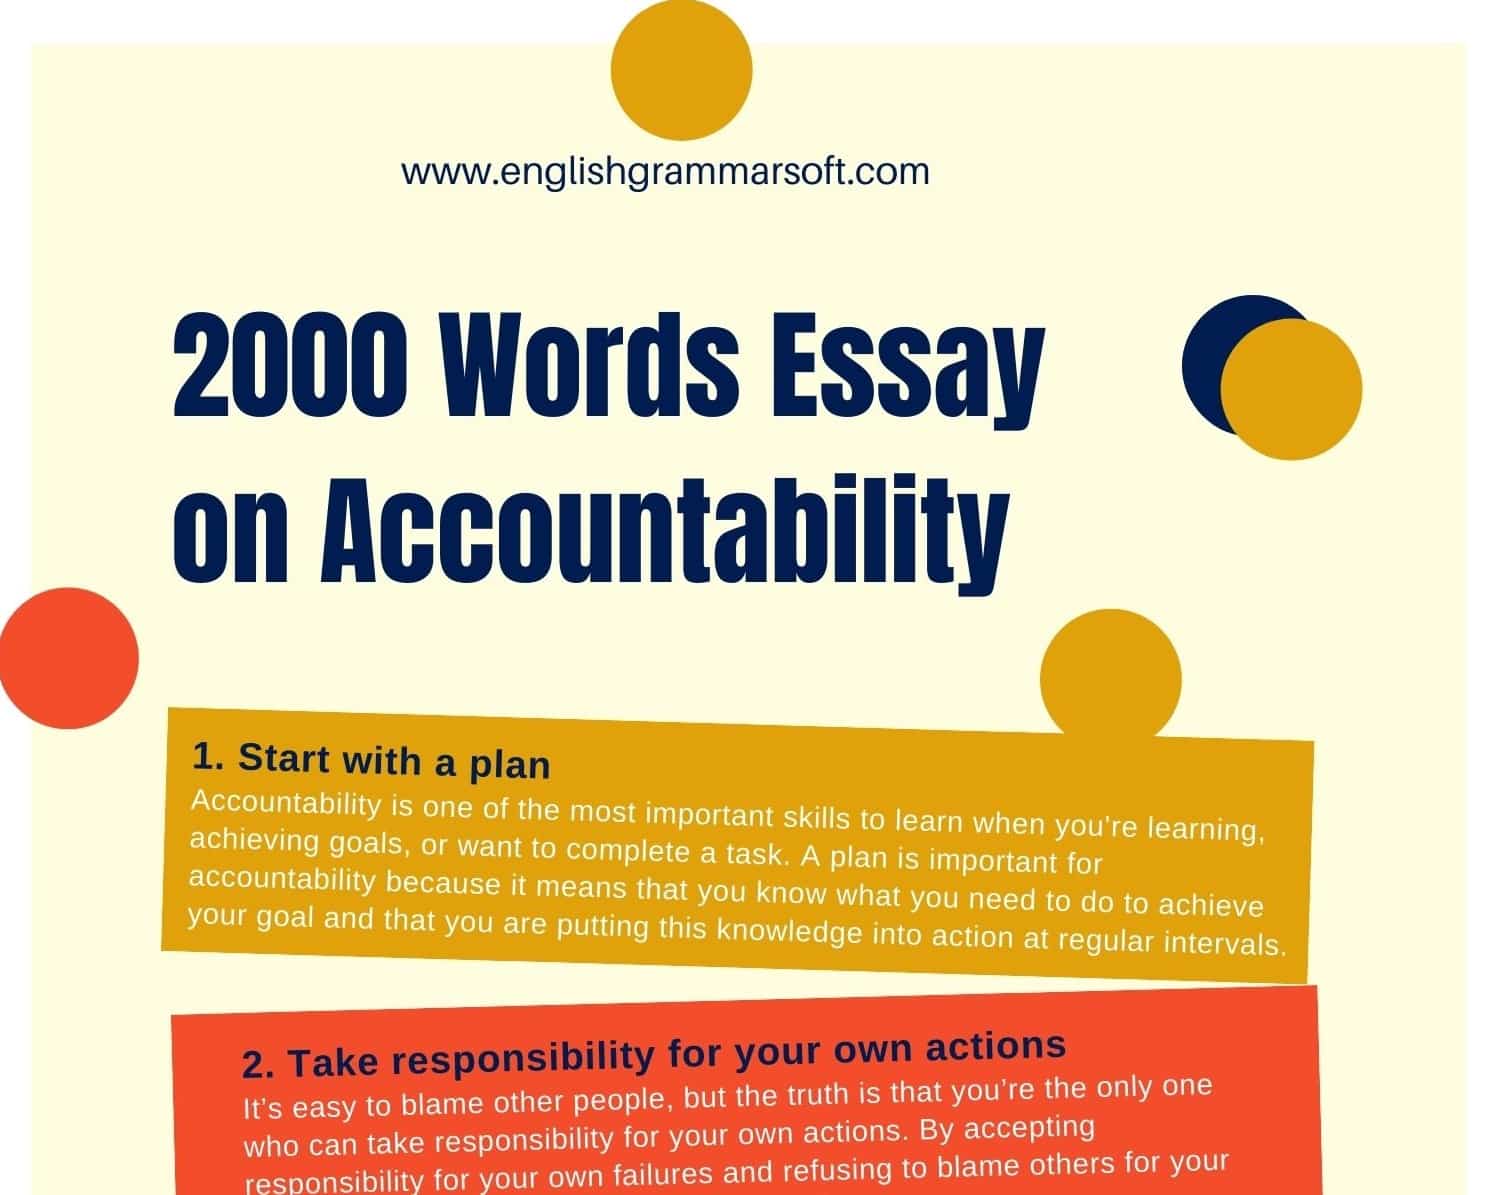 A free 2000 Words Essay on Accountability EnglishGrammarSoft